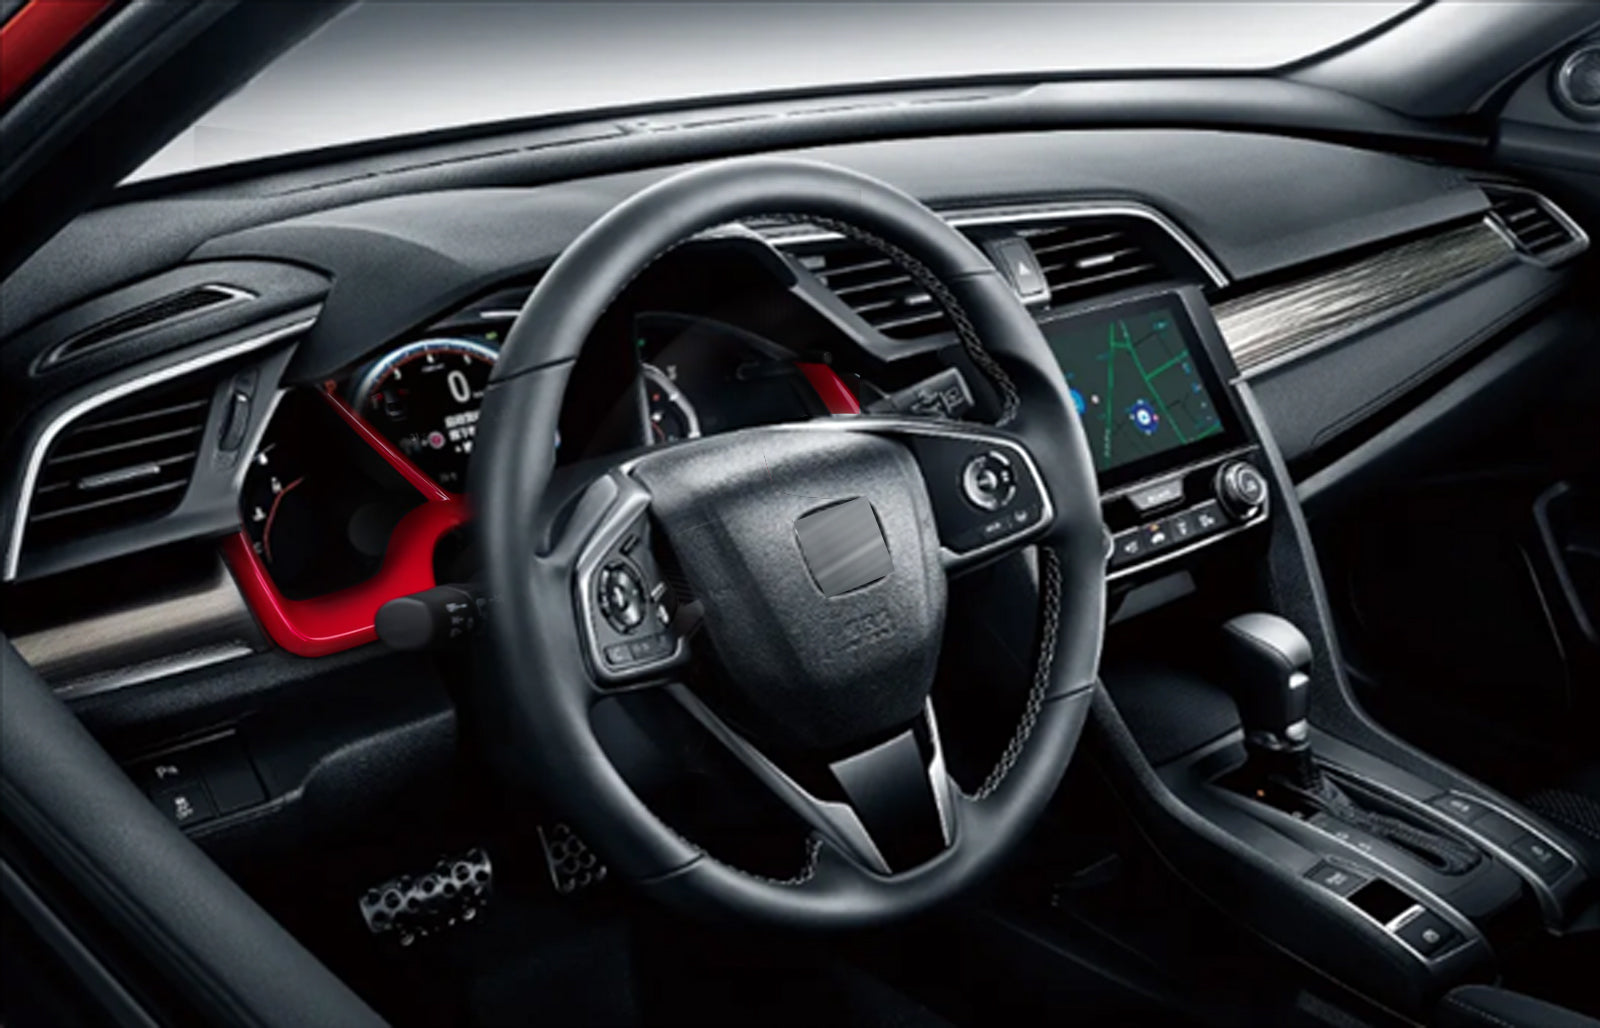 Car Interior Dashboard Decor Frame Red Trim ABS for Honda Civic 10th Gen  2016 2017 2018 2019 2020 2021 Accessories Auto Parts